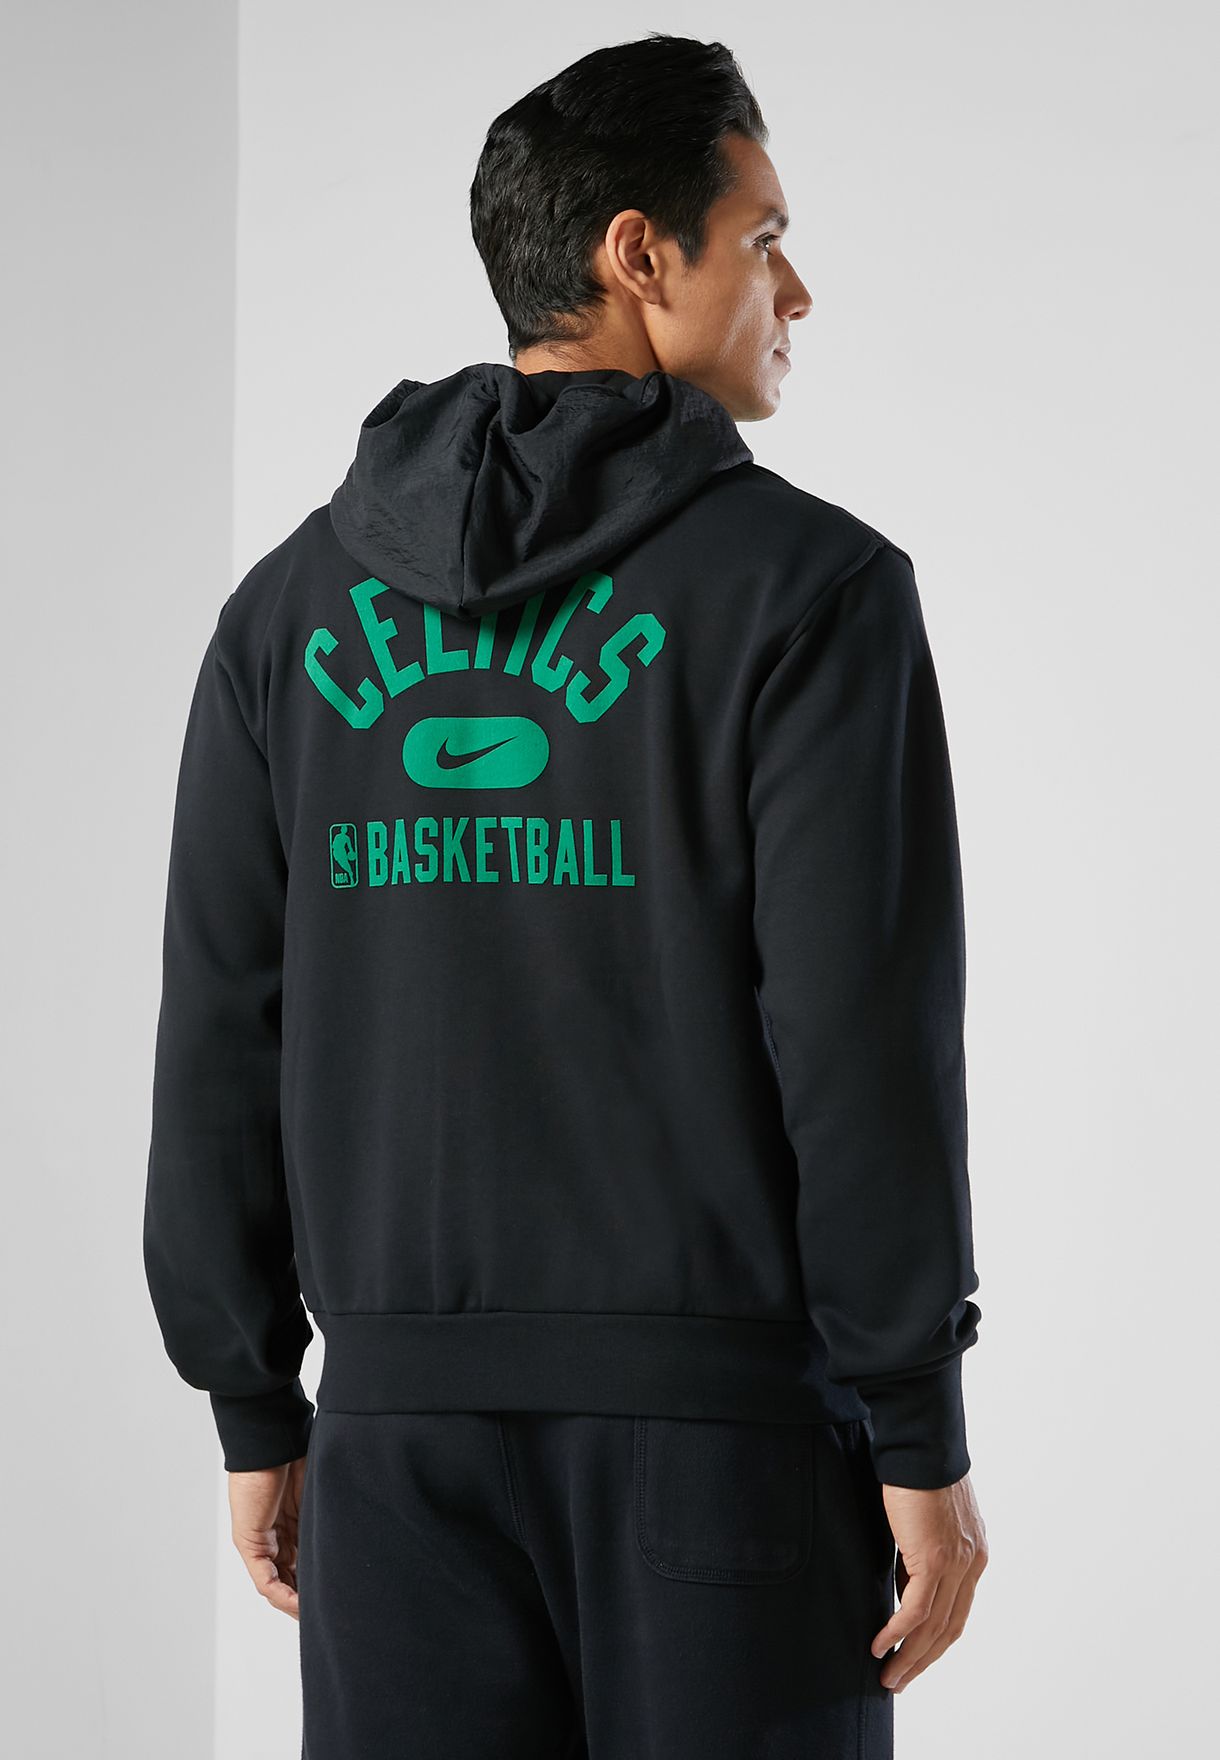 Celtics Fleece Sweatshirt